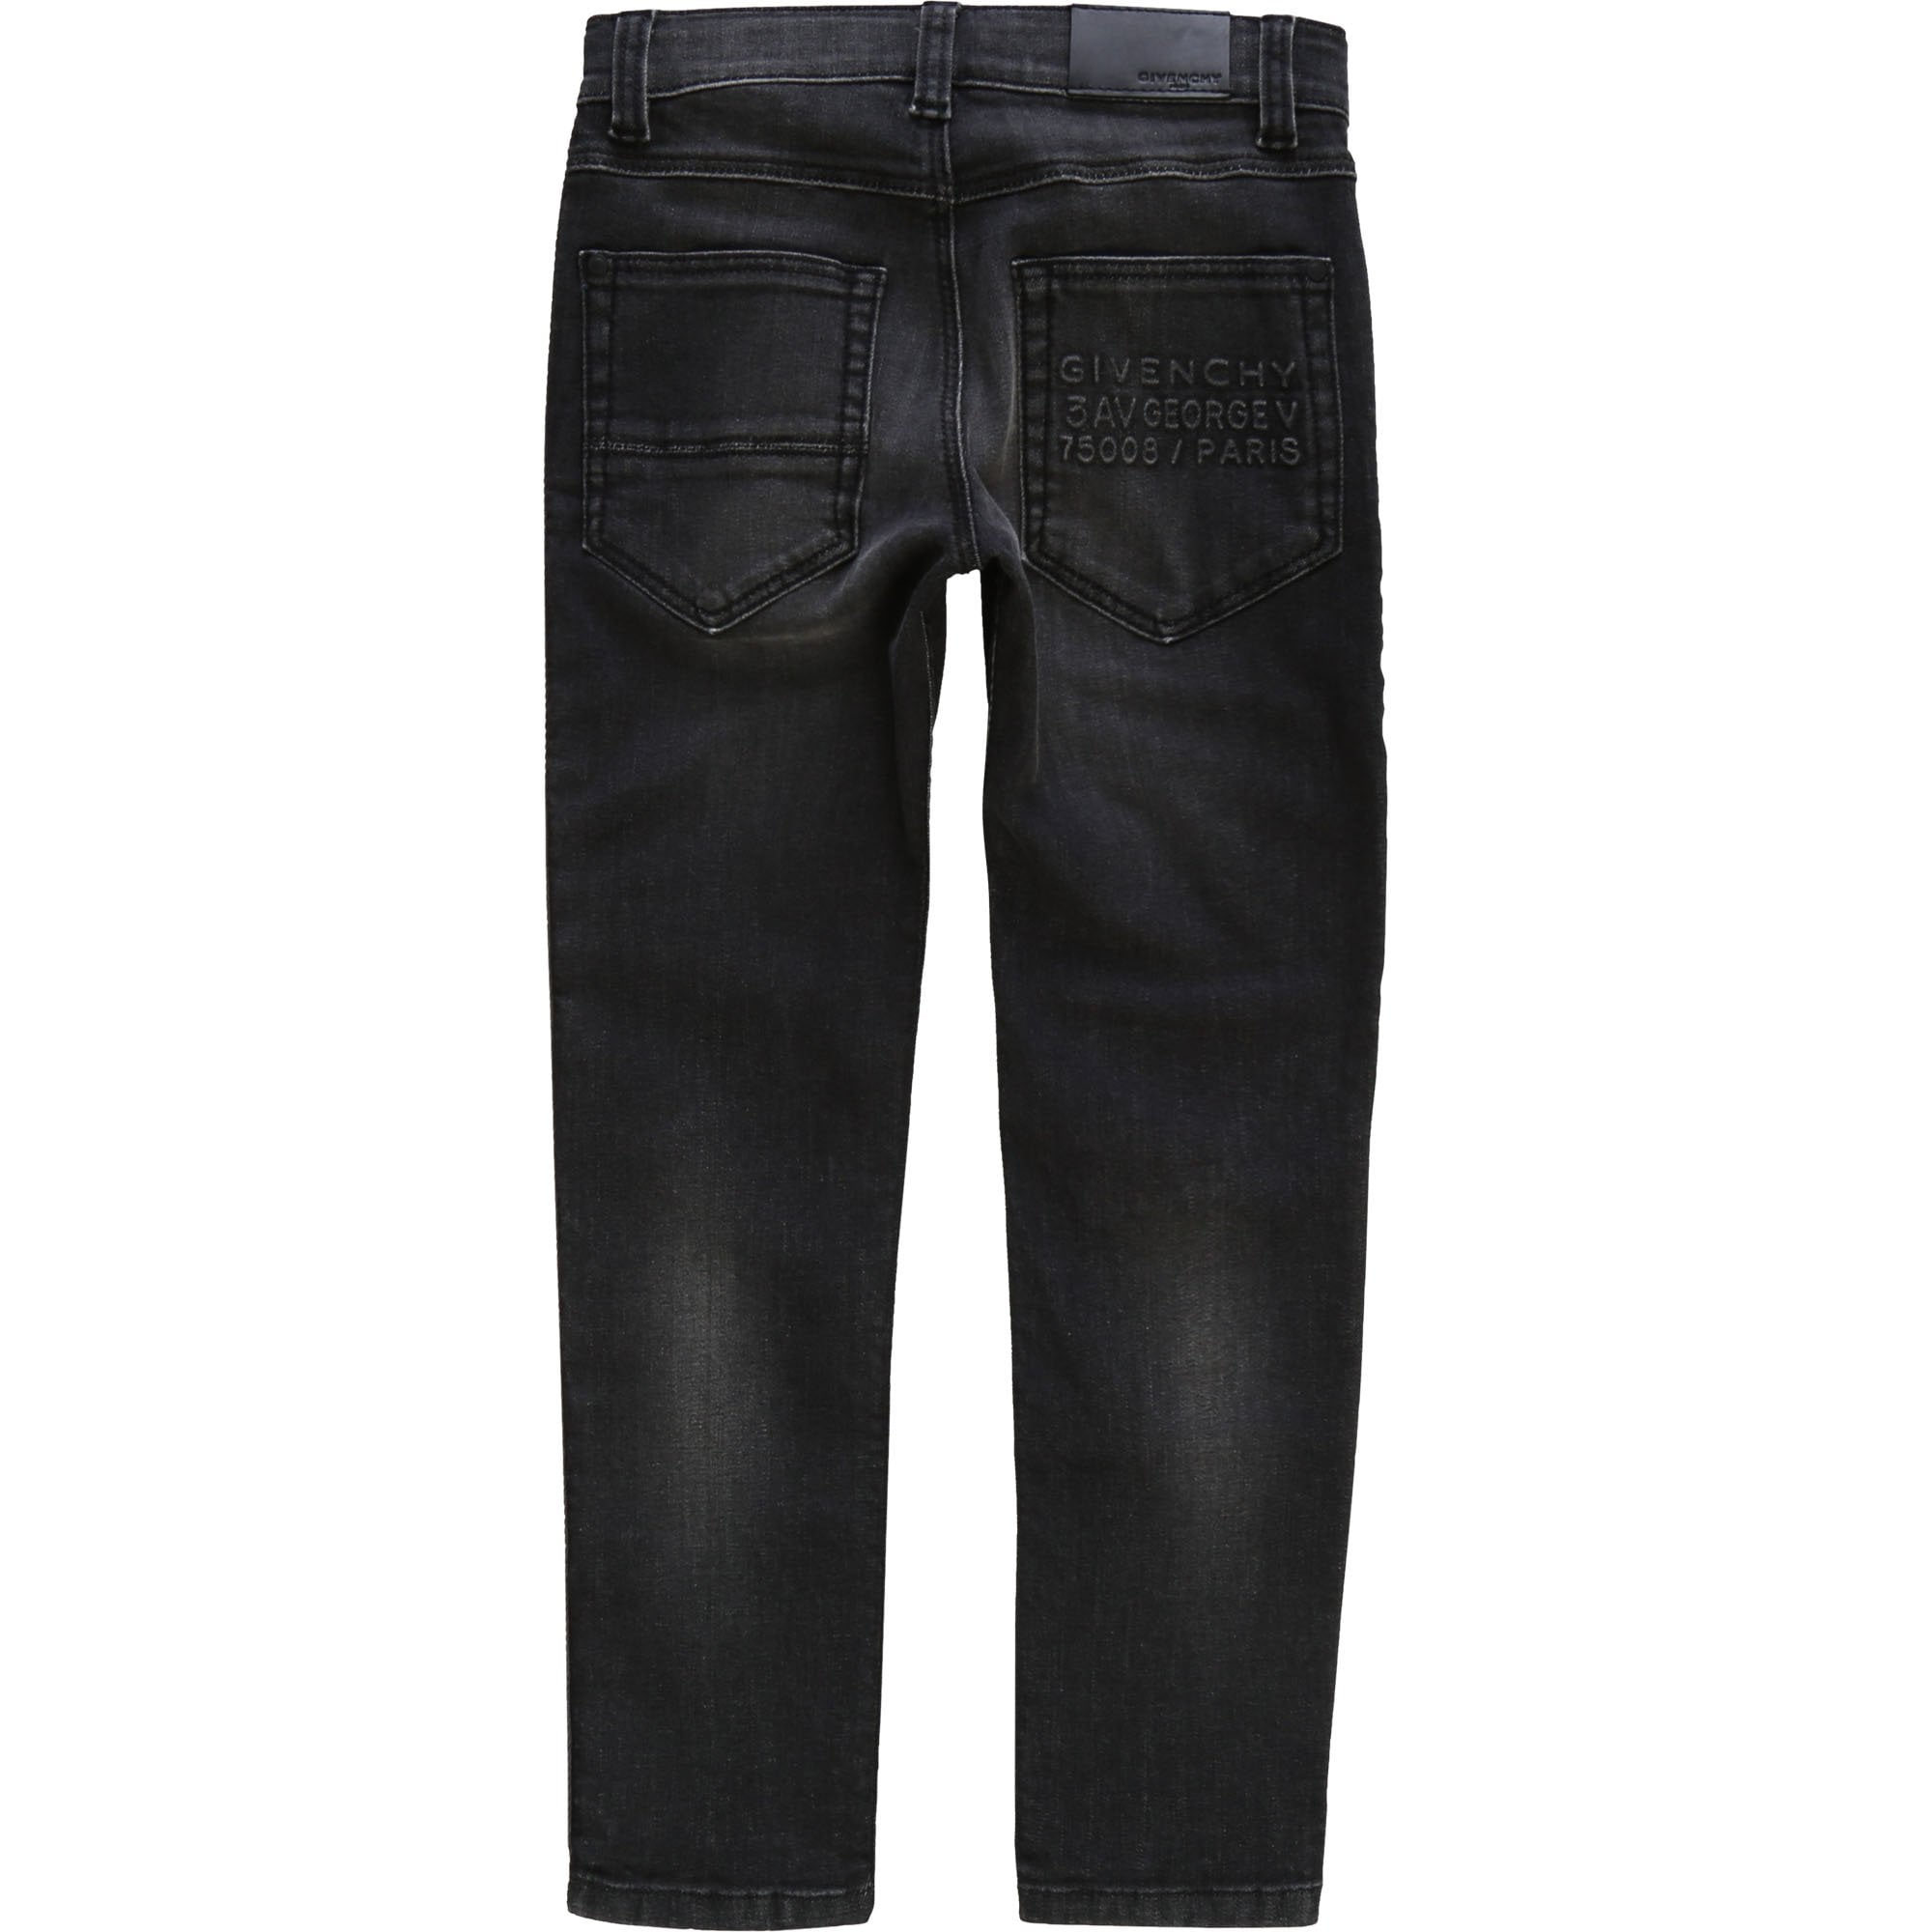 Givenchy Boys Denim Jeans Black